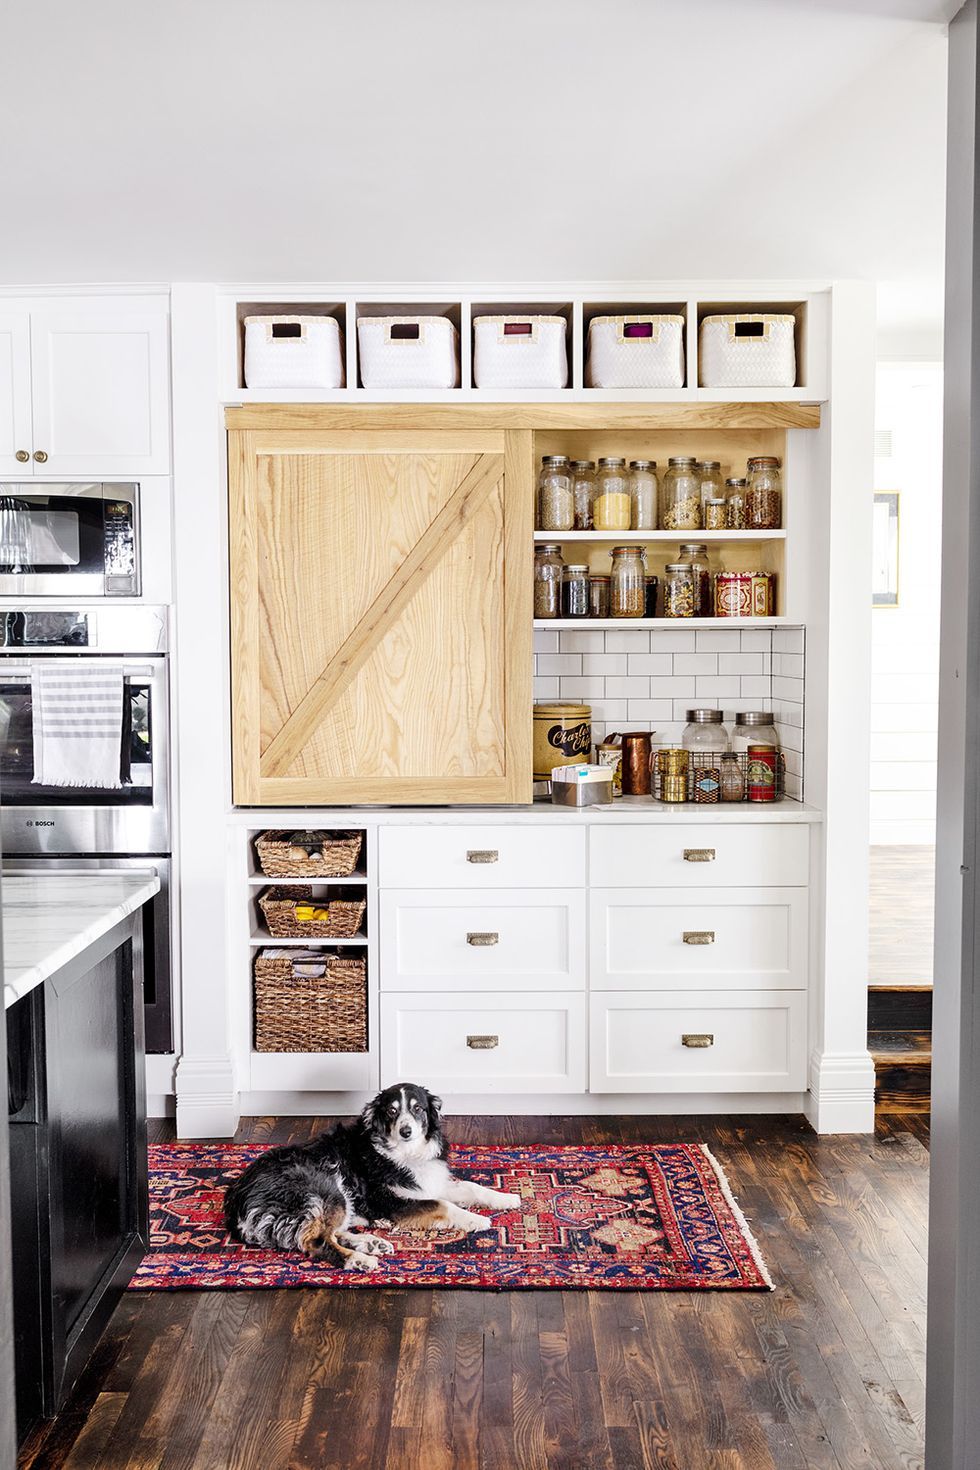 38 Best Small Kitchen Design Ideas Tiny Kitchen Decorating